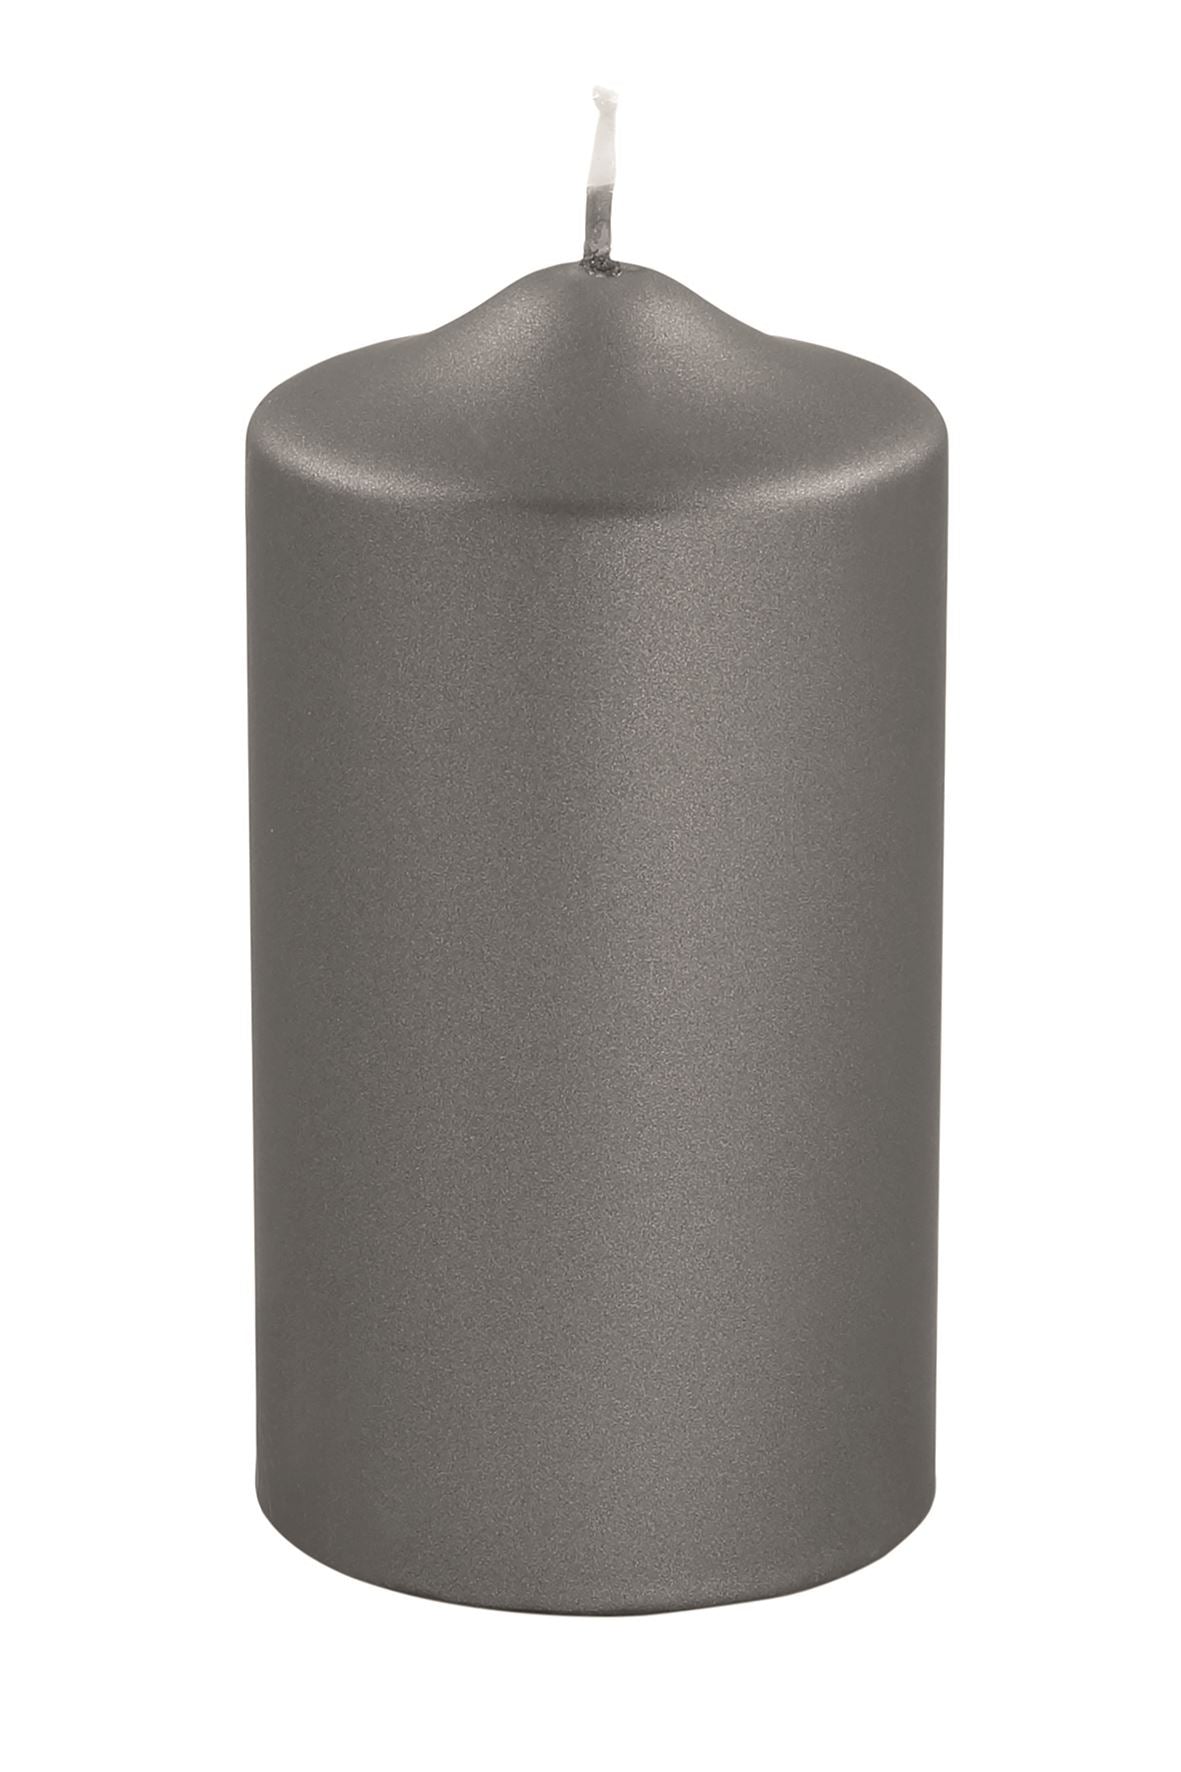 Fink metallic Stumpenkerze Candle grau Paraffin Höhe 15 cm